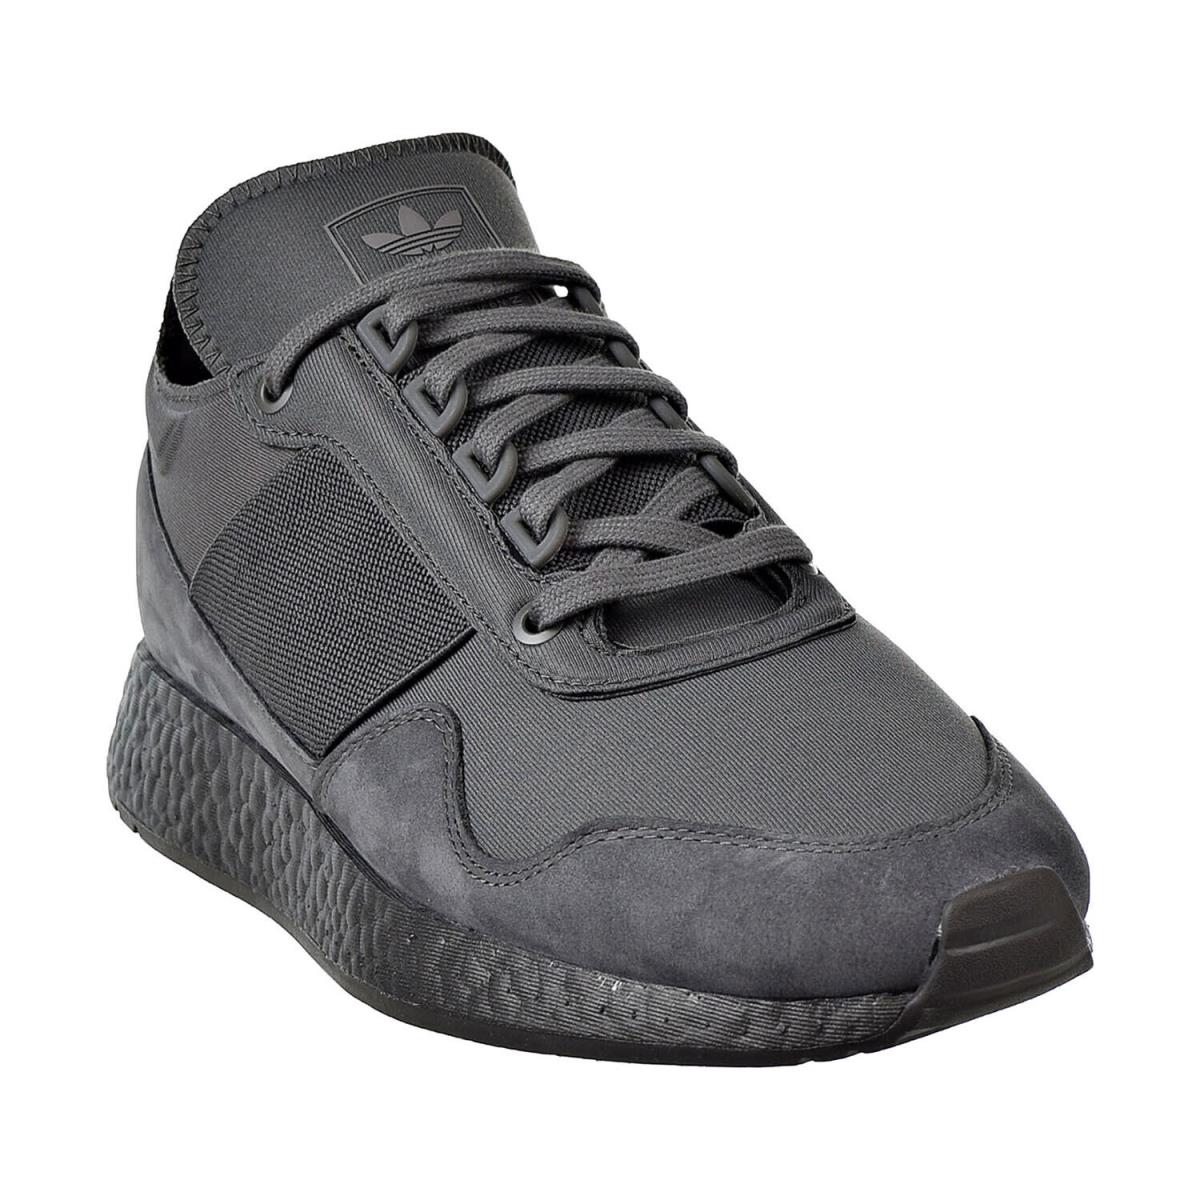 Adidas Originals York Present Arsham Men`s Shoes Trace Grey DB1971 - Trace Grey